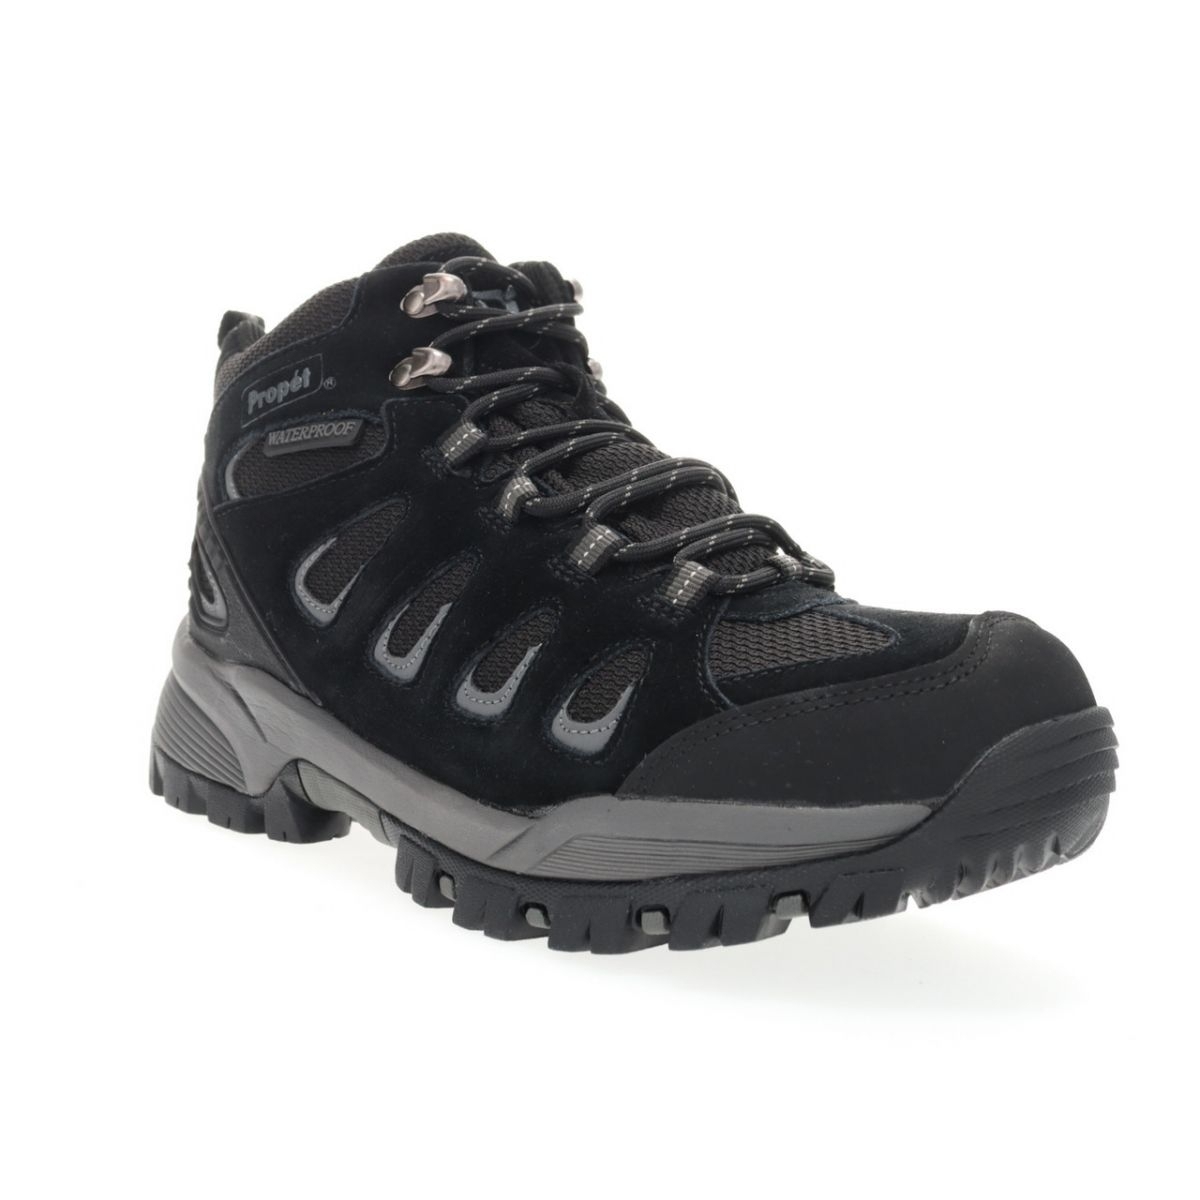 Propet Men's Ridge Walker Hiking Boot Black - M3599B 8 XX US Men BLACK - BLACK, 11 X-Wide